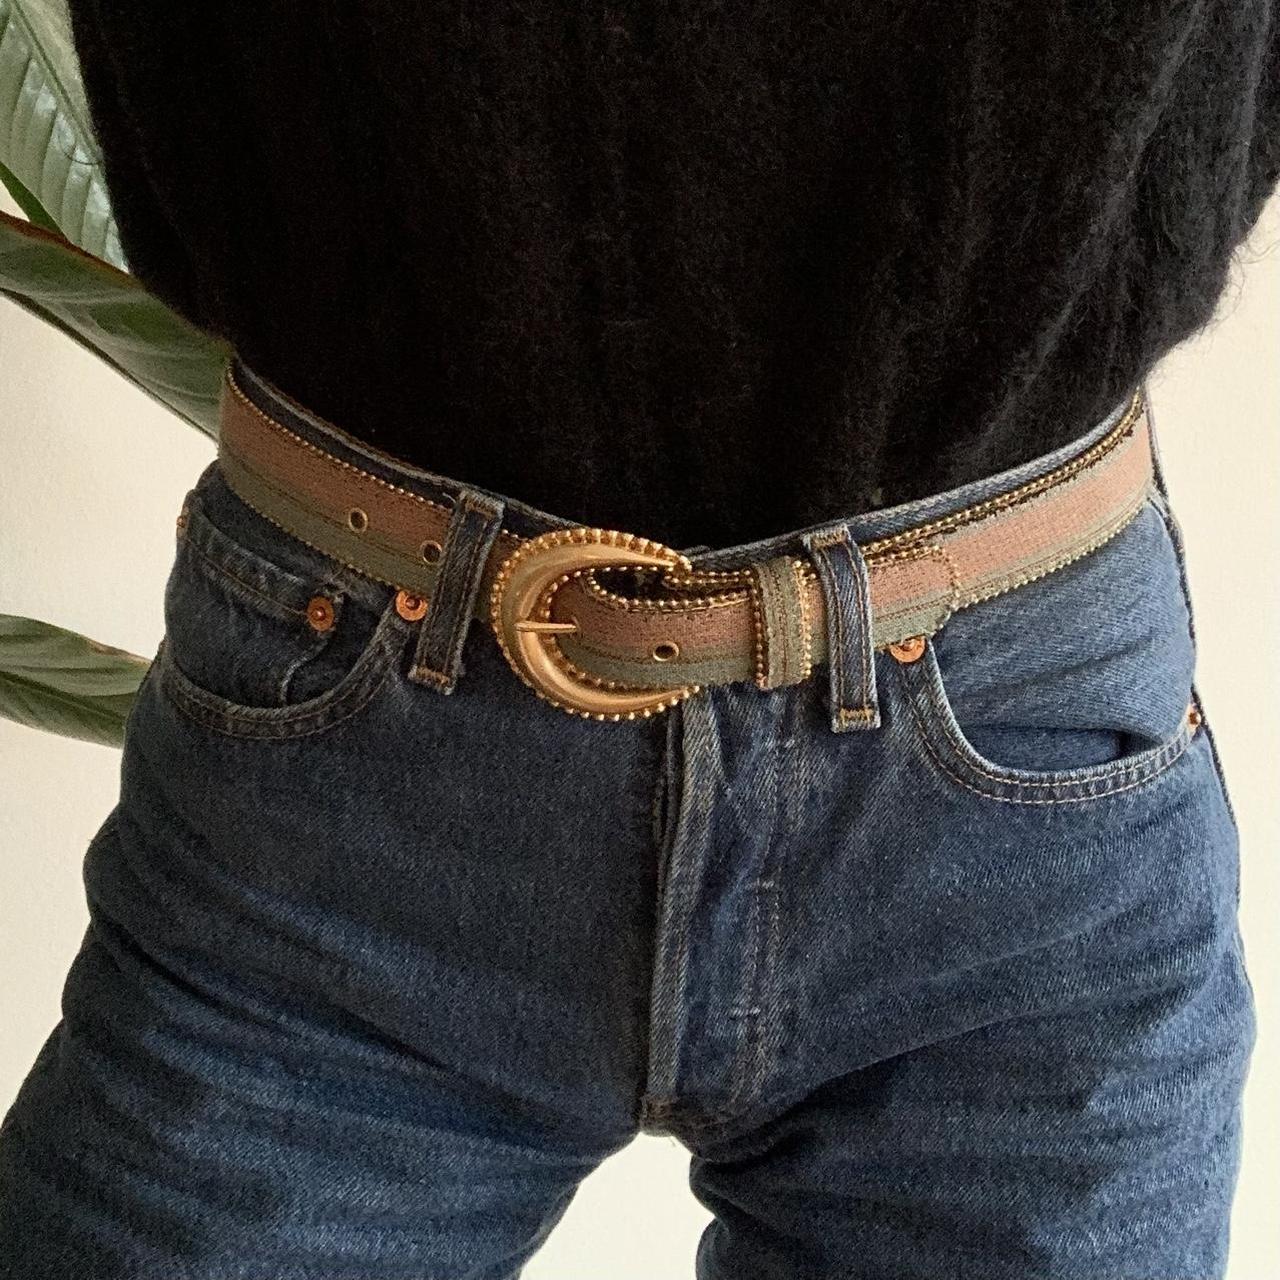 Product Image 2 - Vintage western belt with large